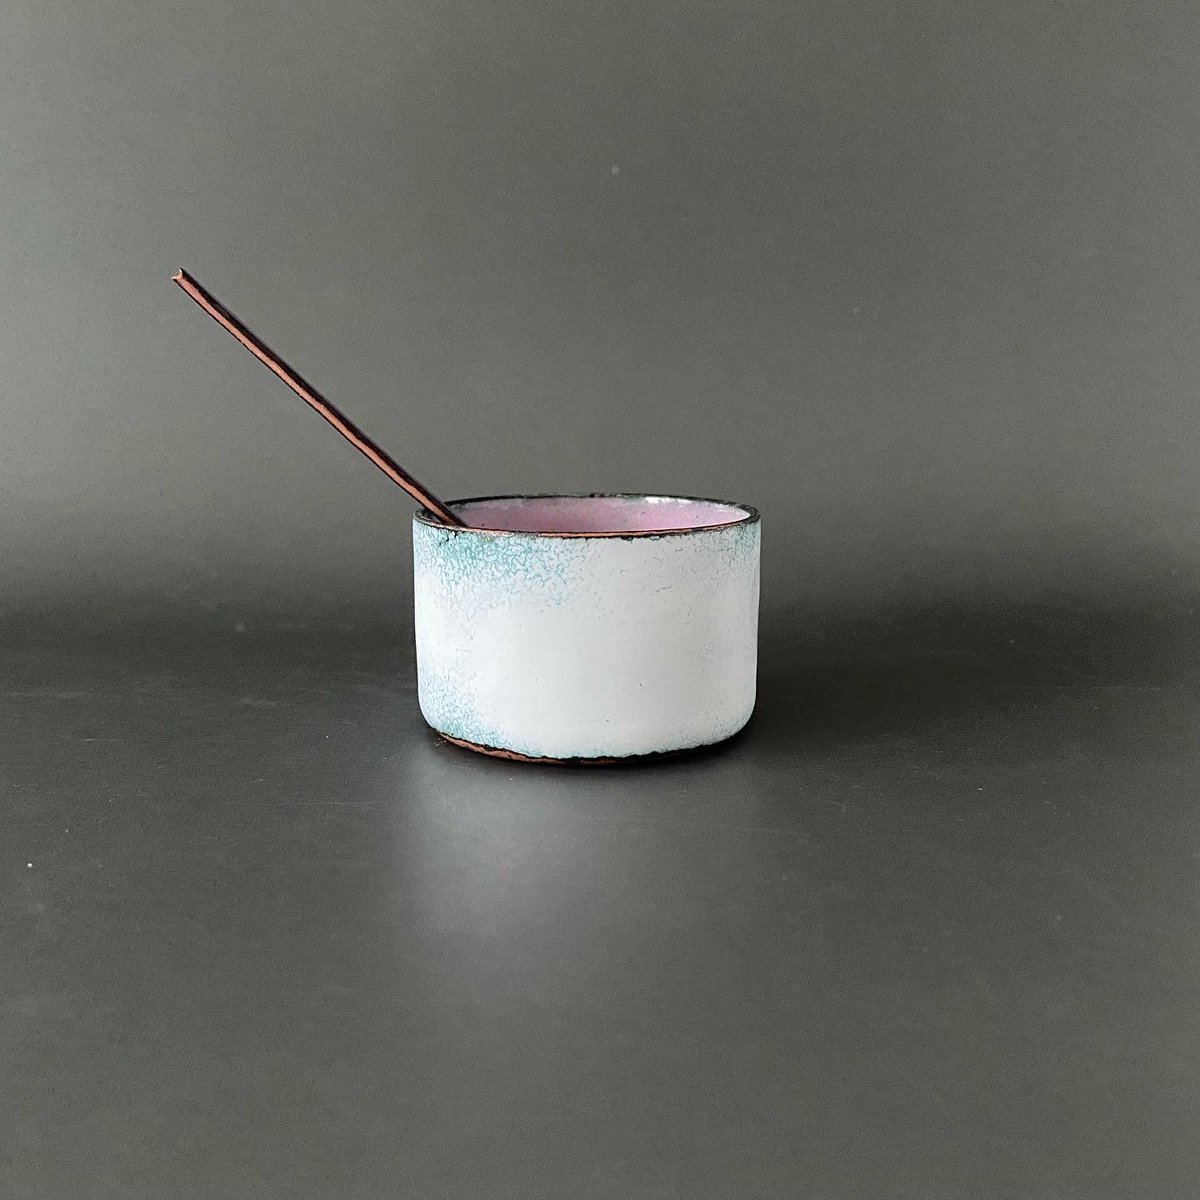 White and Pink Enamel Pot - Small tuppu.net/a1280f2d #bizbubble #HandmadeHour #inbizhour #shopsmall ##UKGiftHour #giftideas #MHHSBD #UKHashtags #EnamelPot